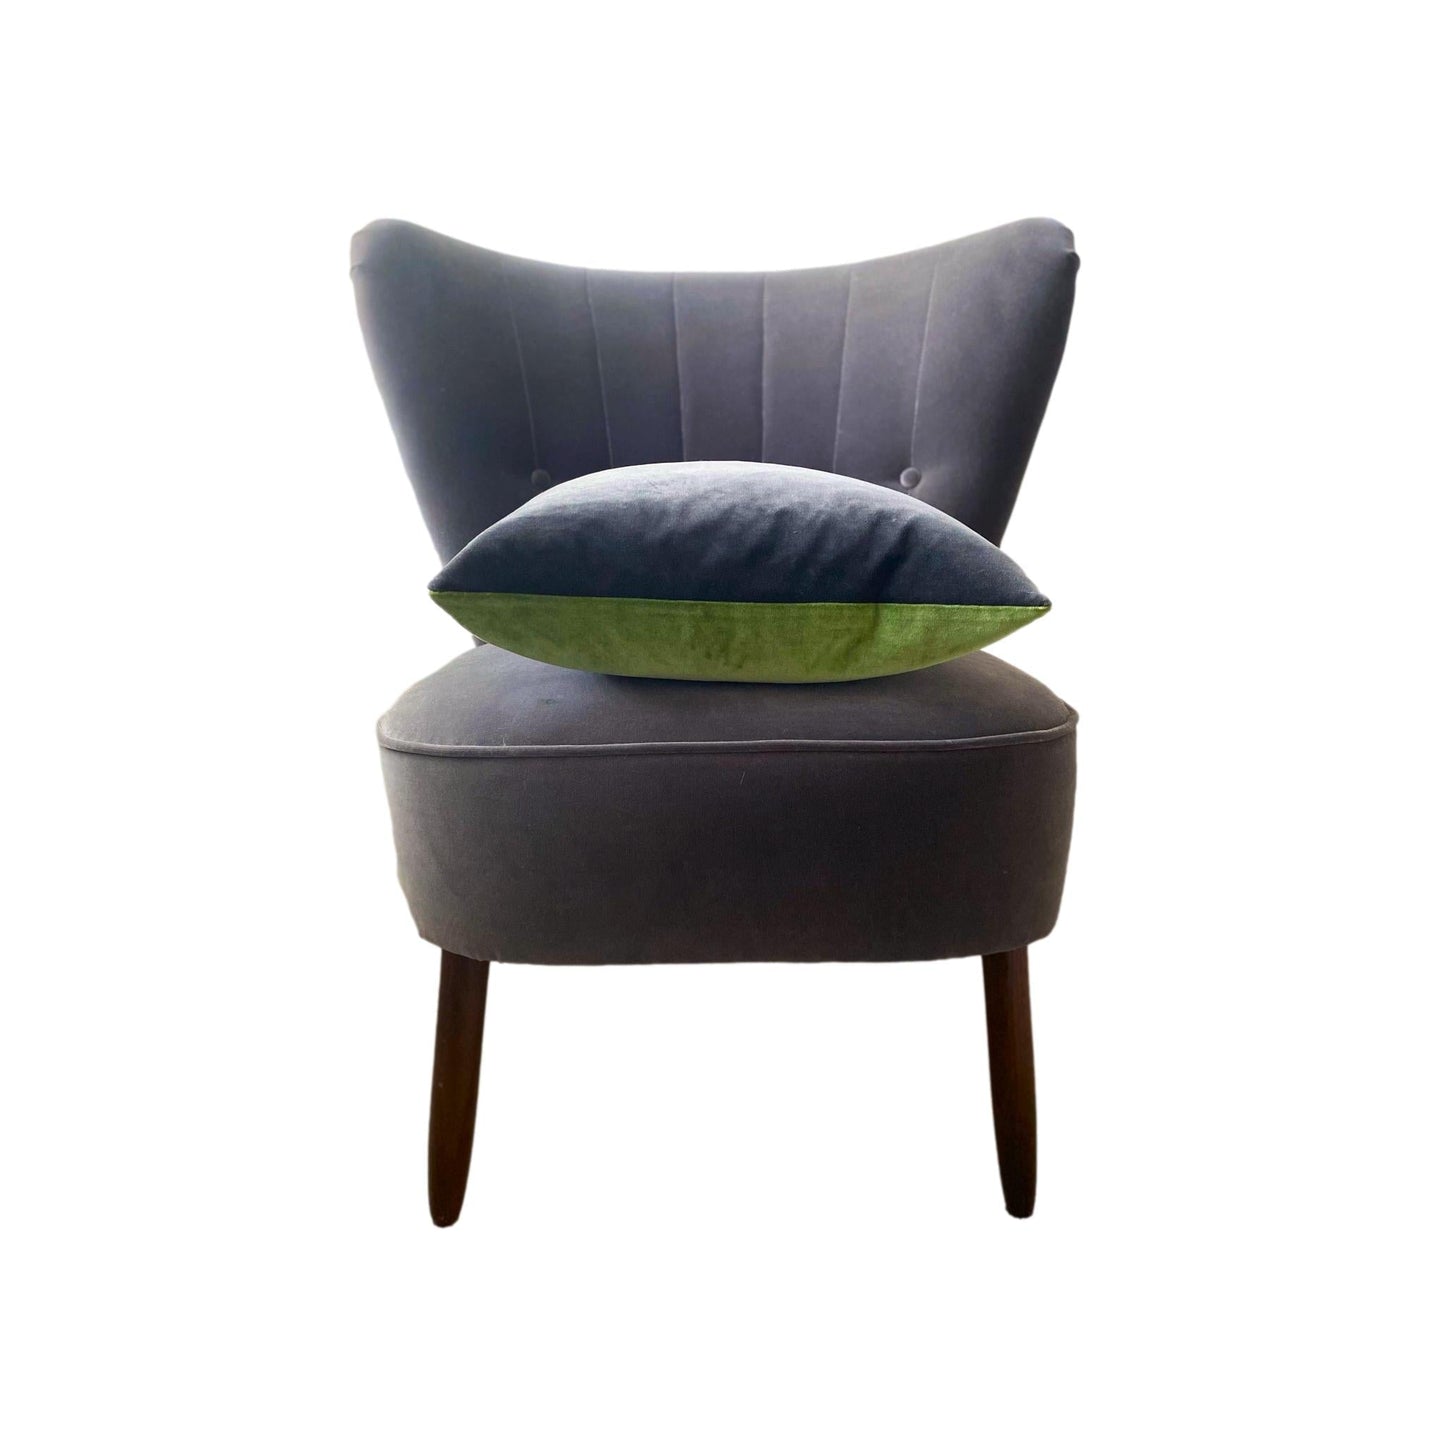 Sage Green Velvet Cushion Cover with Dark Grey